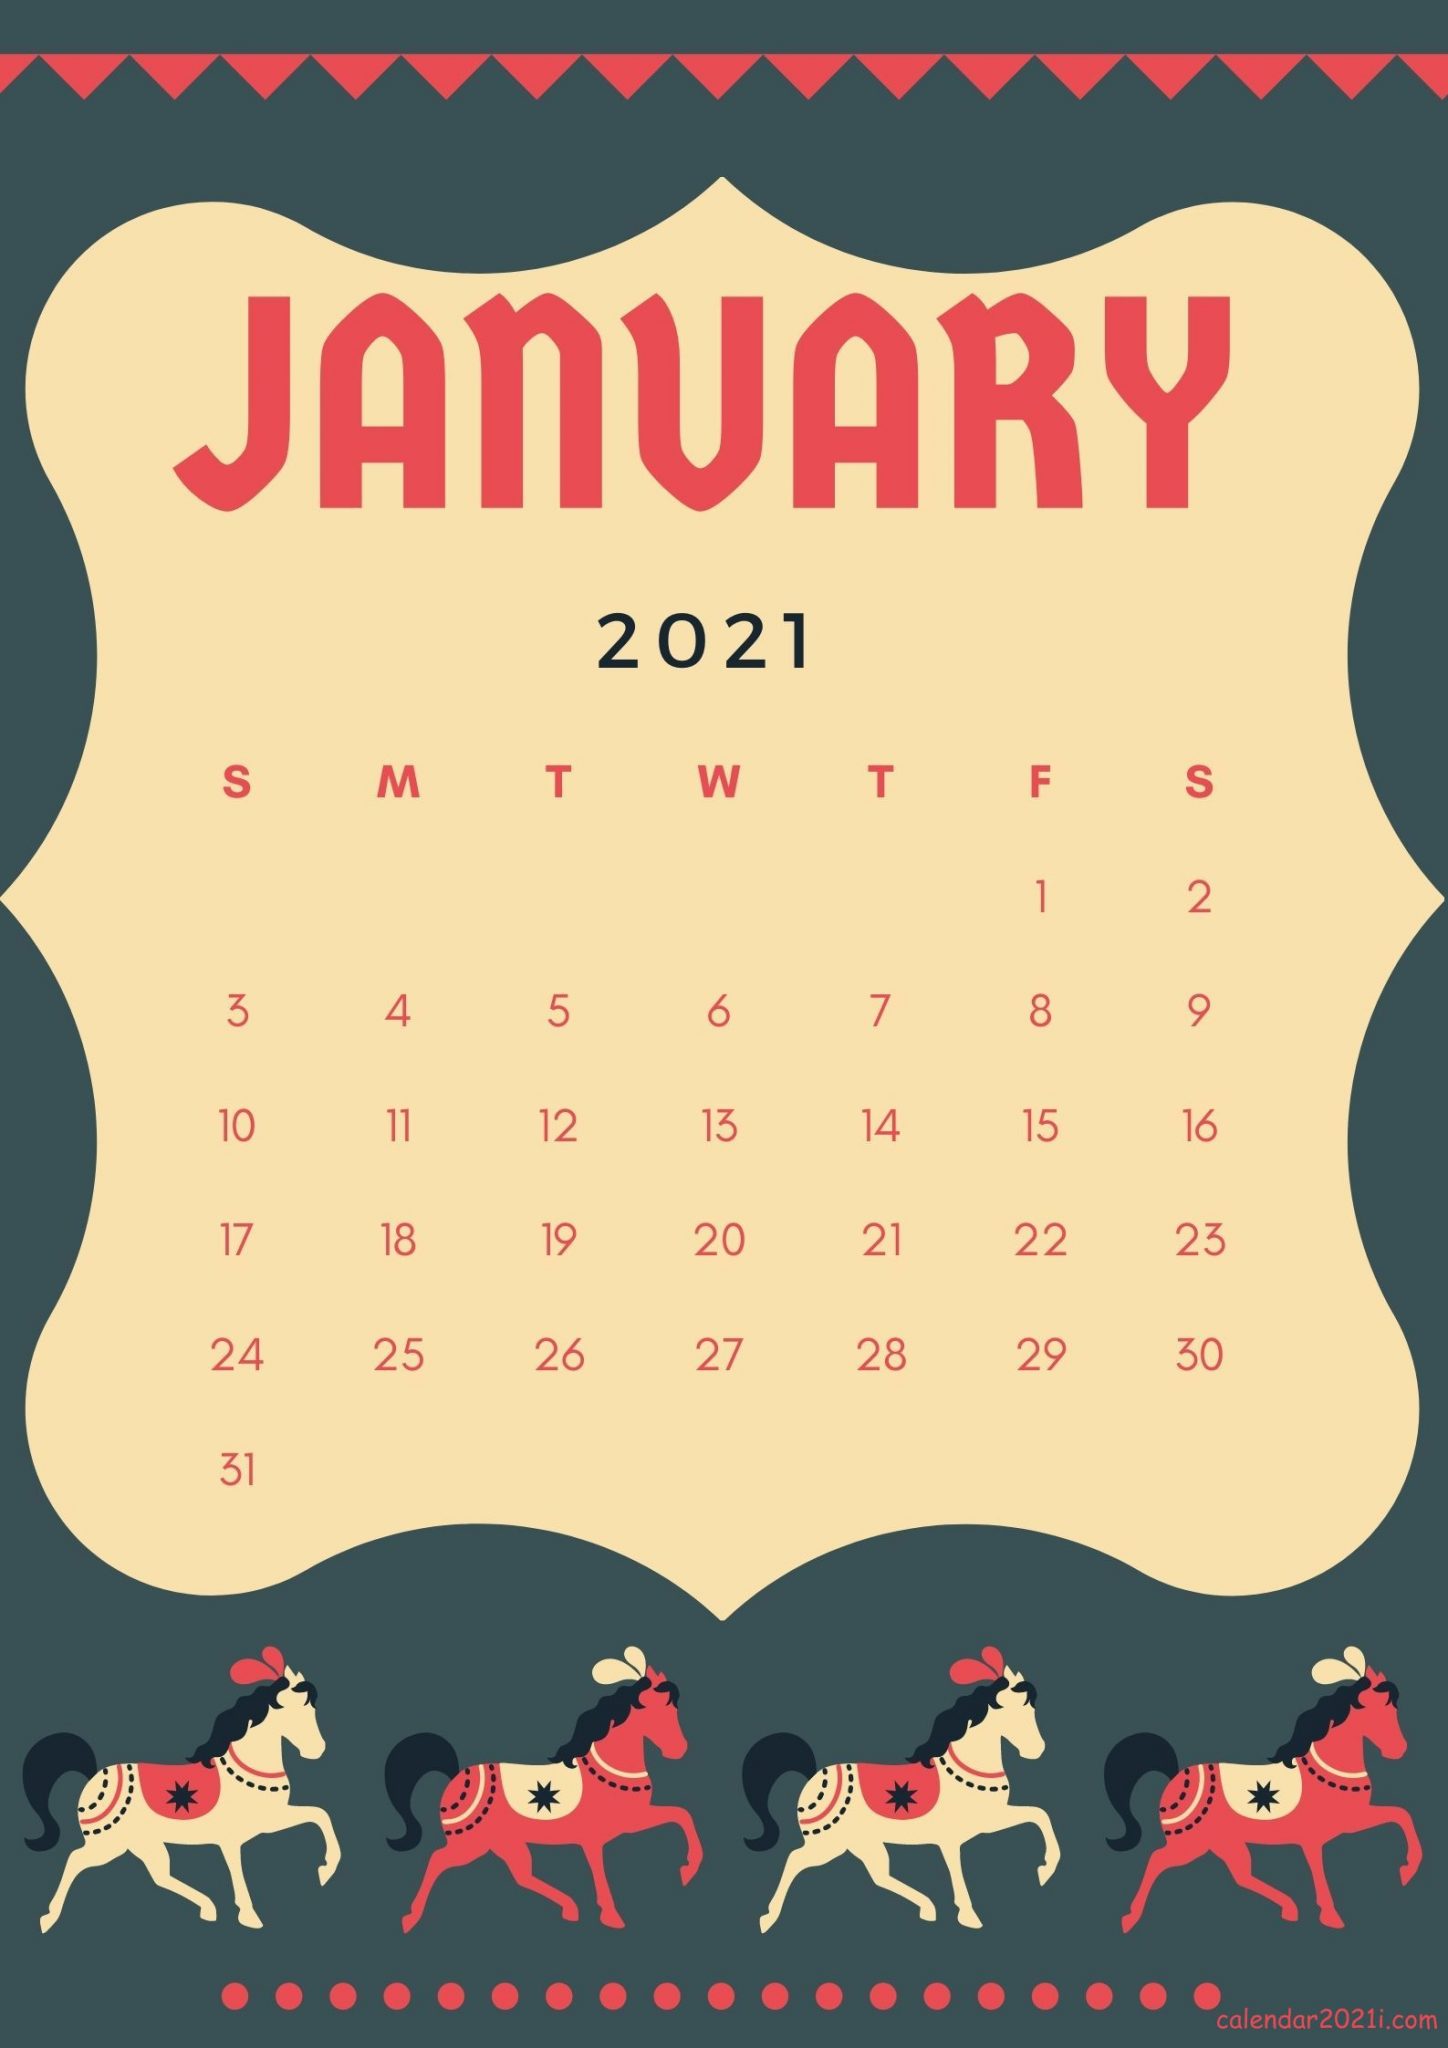 Cute January 2021 Calendar Design Free Download